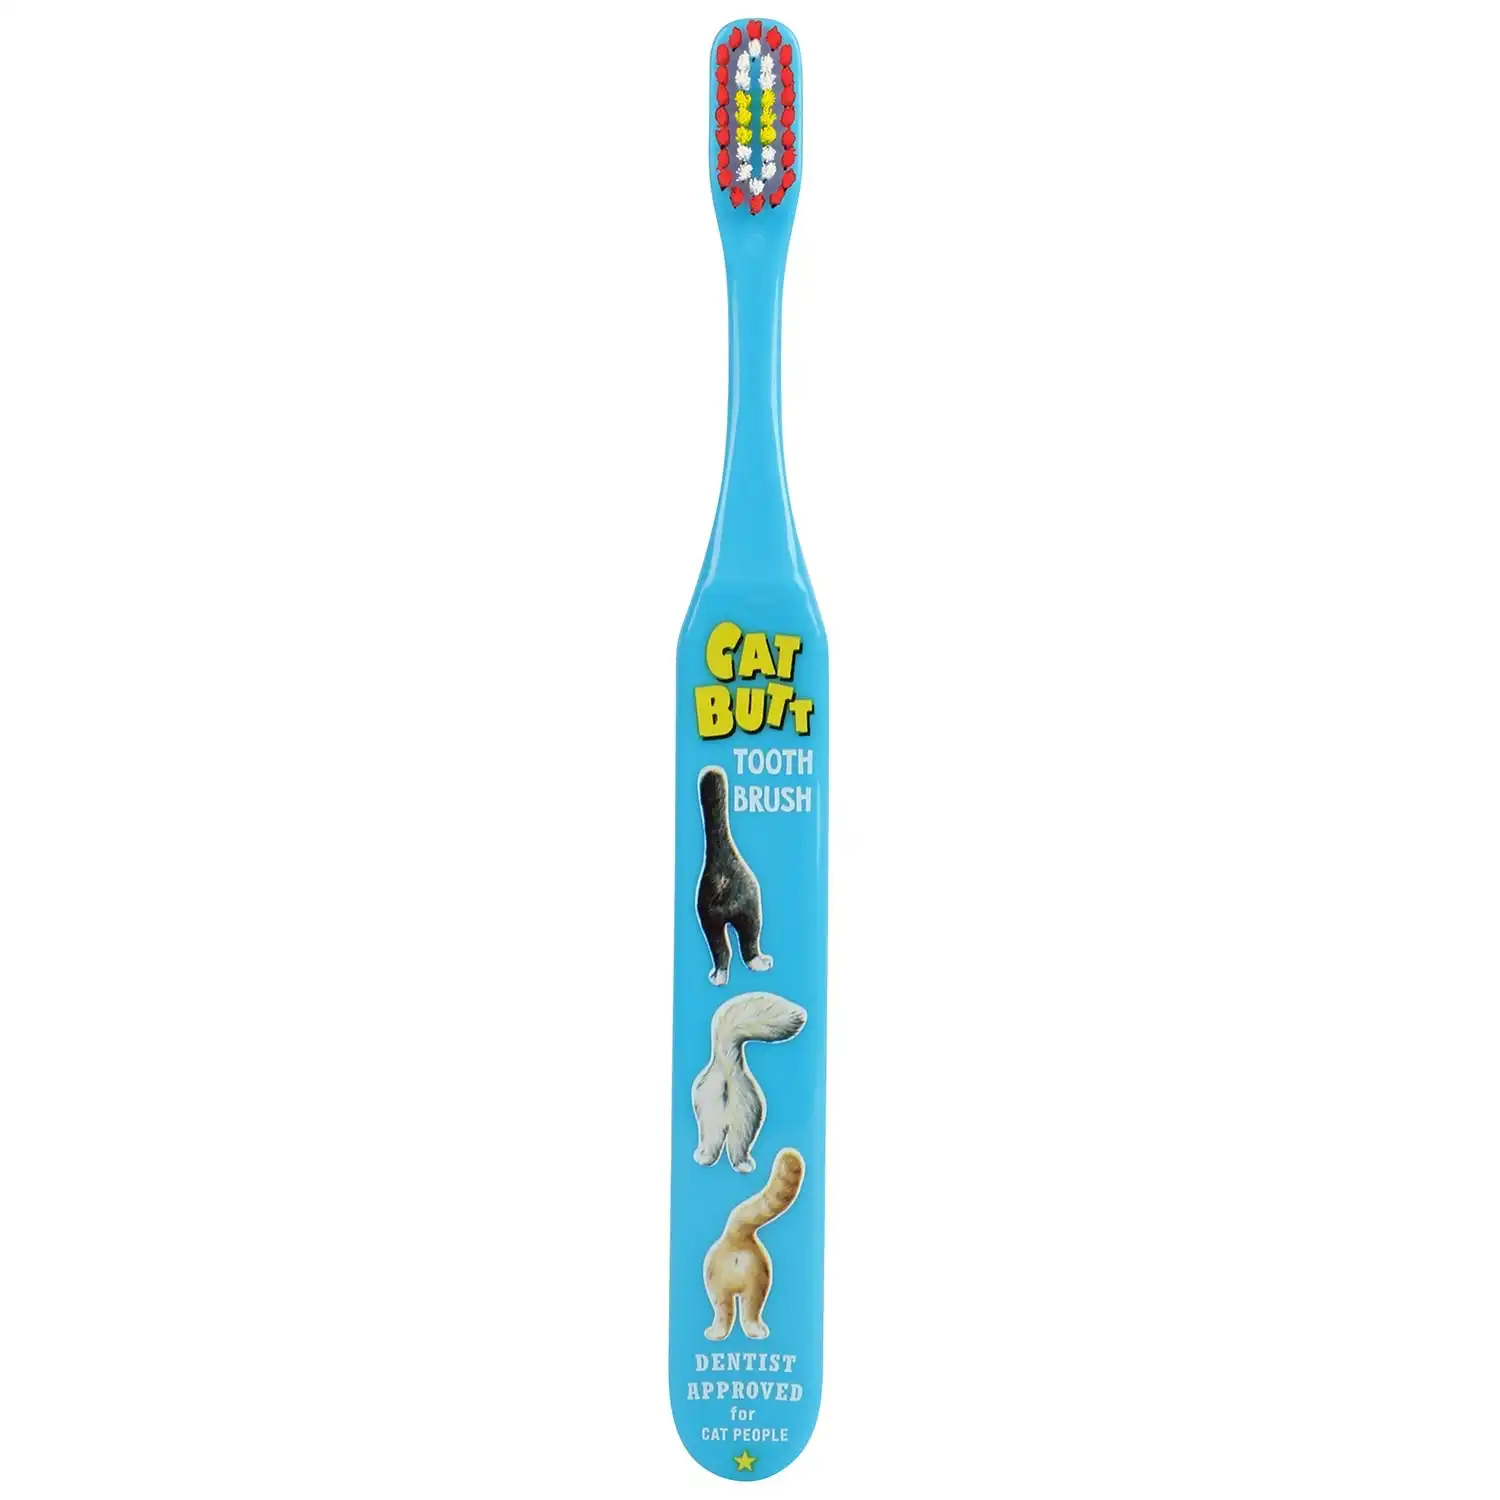 Toothbrush - Cat Butt